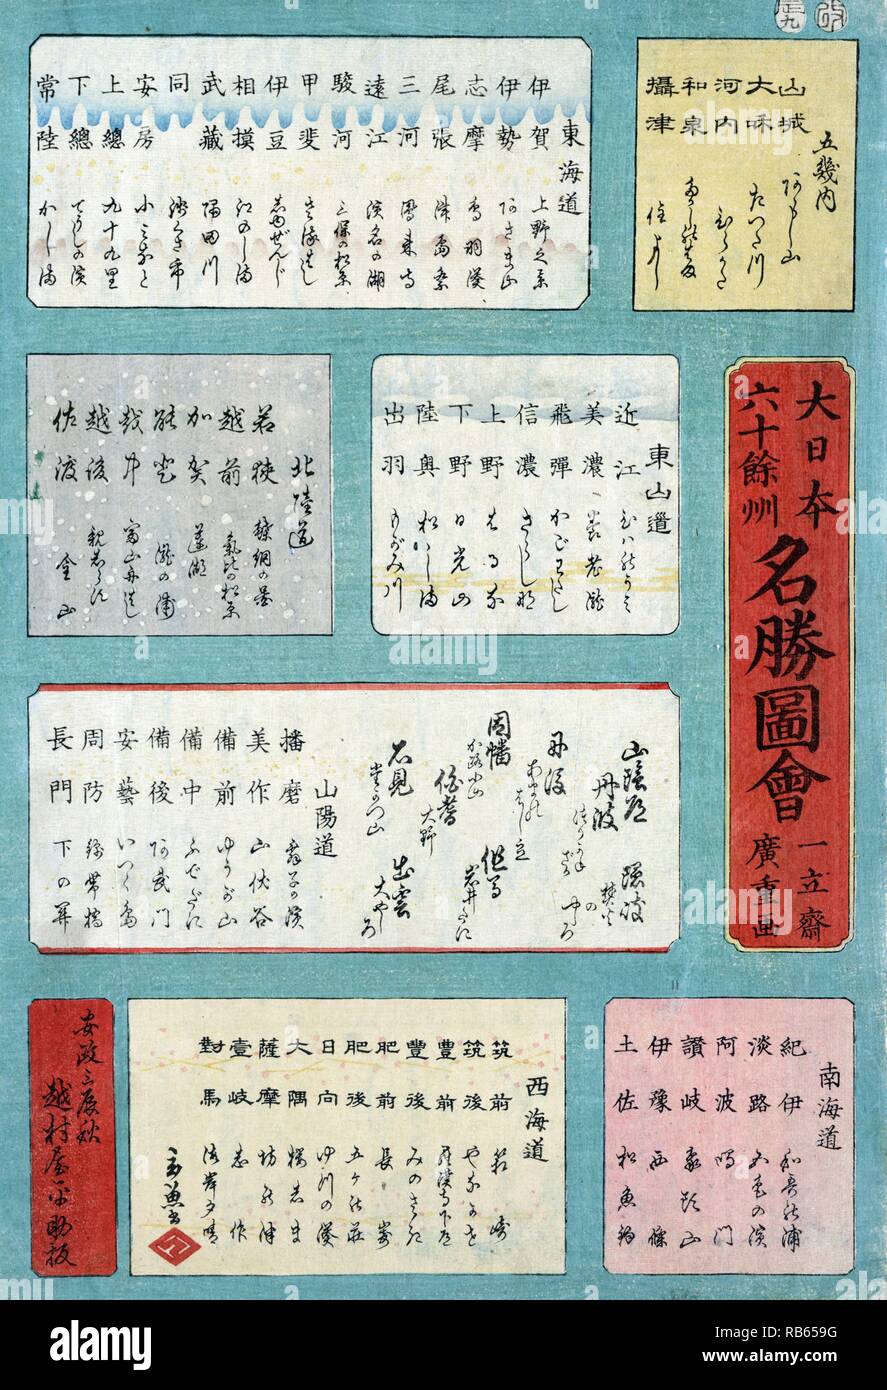 Dainihon rokuju yoshu meisho zue - mokuroku. Stampa mostra un sommario pagina per la serie di stampe; famose vedute nei sessanta-odd province. Data 1856. Attribuito a: Baiso Gengyo. Foto Stock